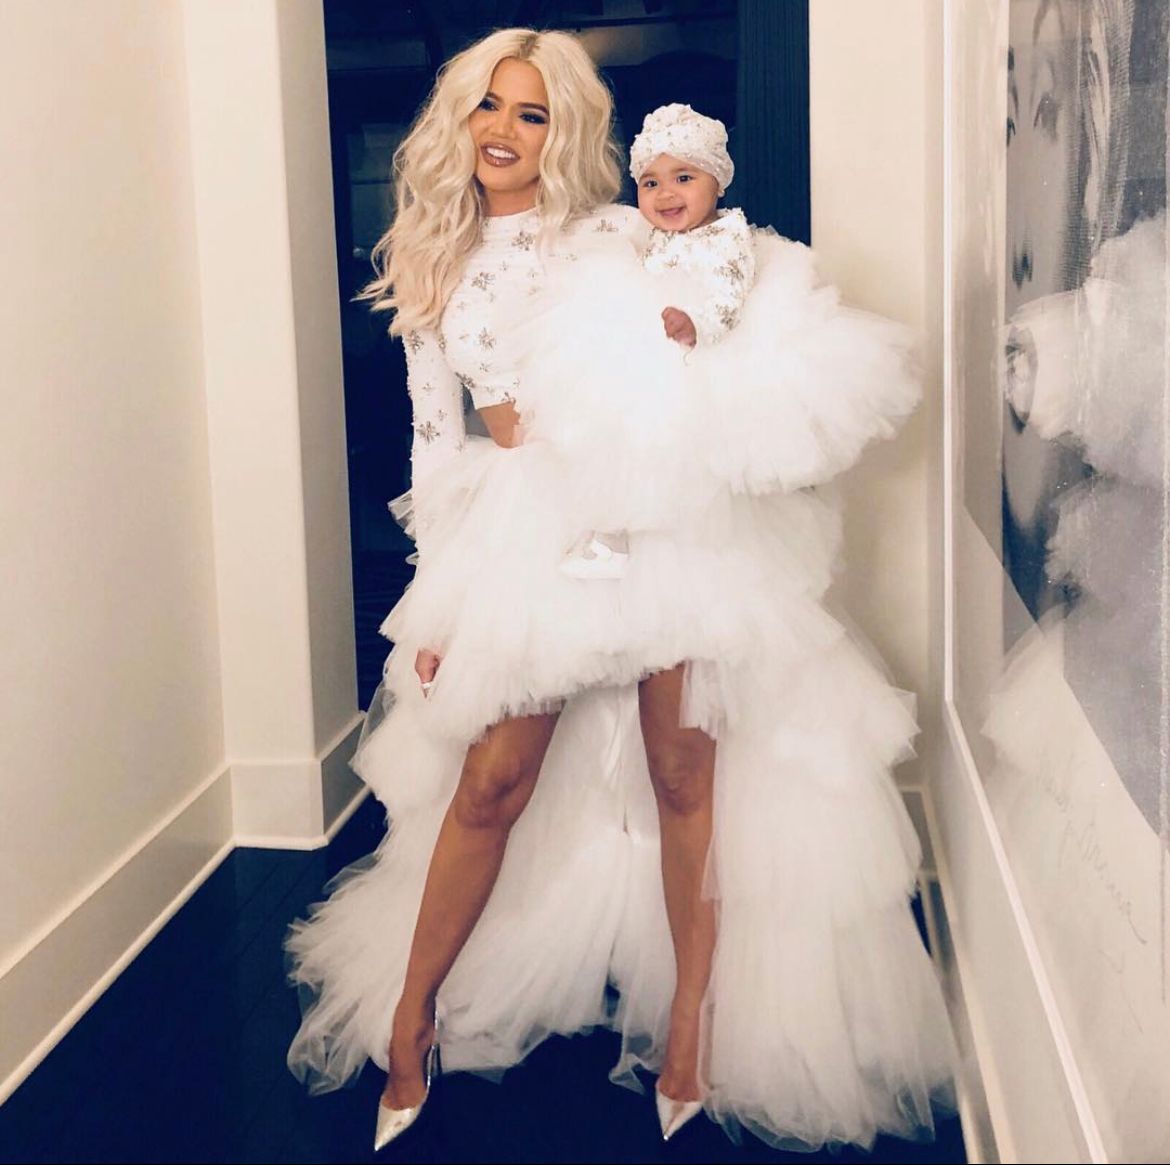 Khloe Kardashian and her daughter True Thompson